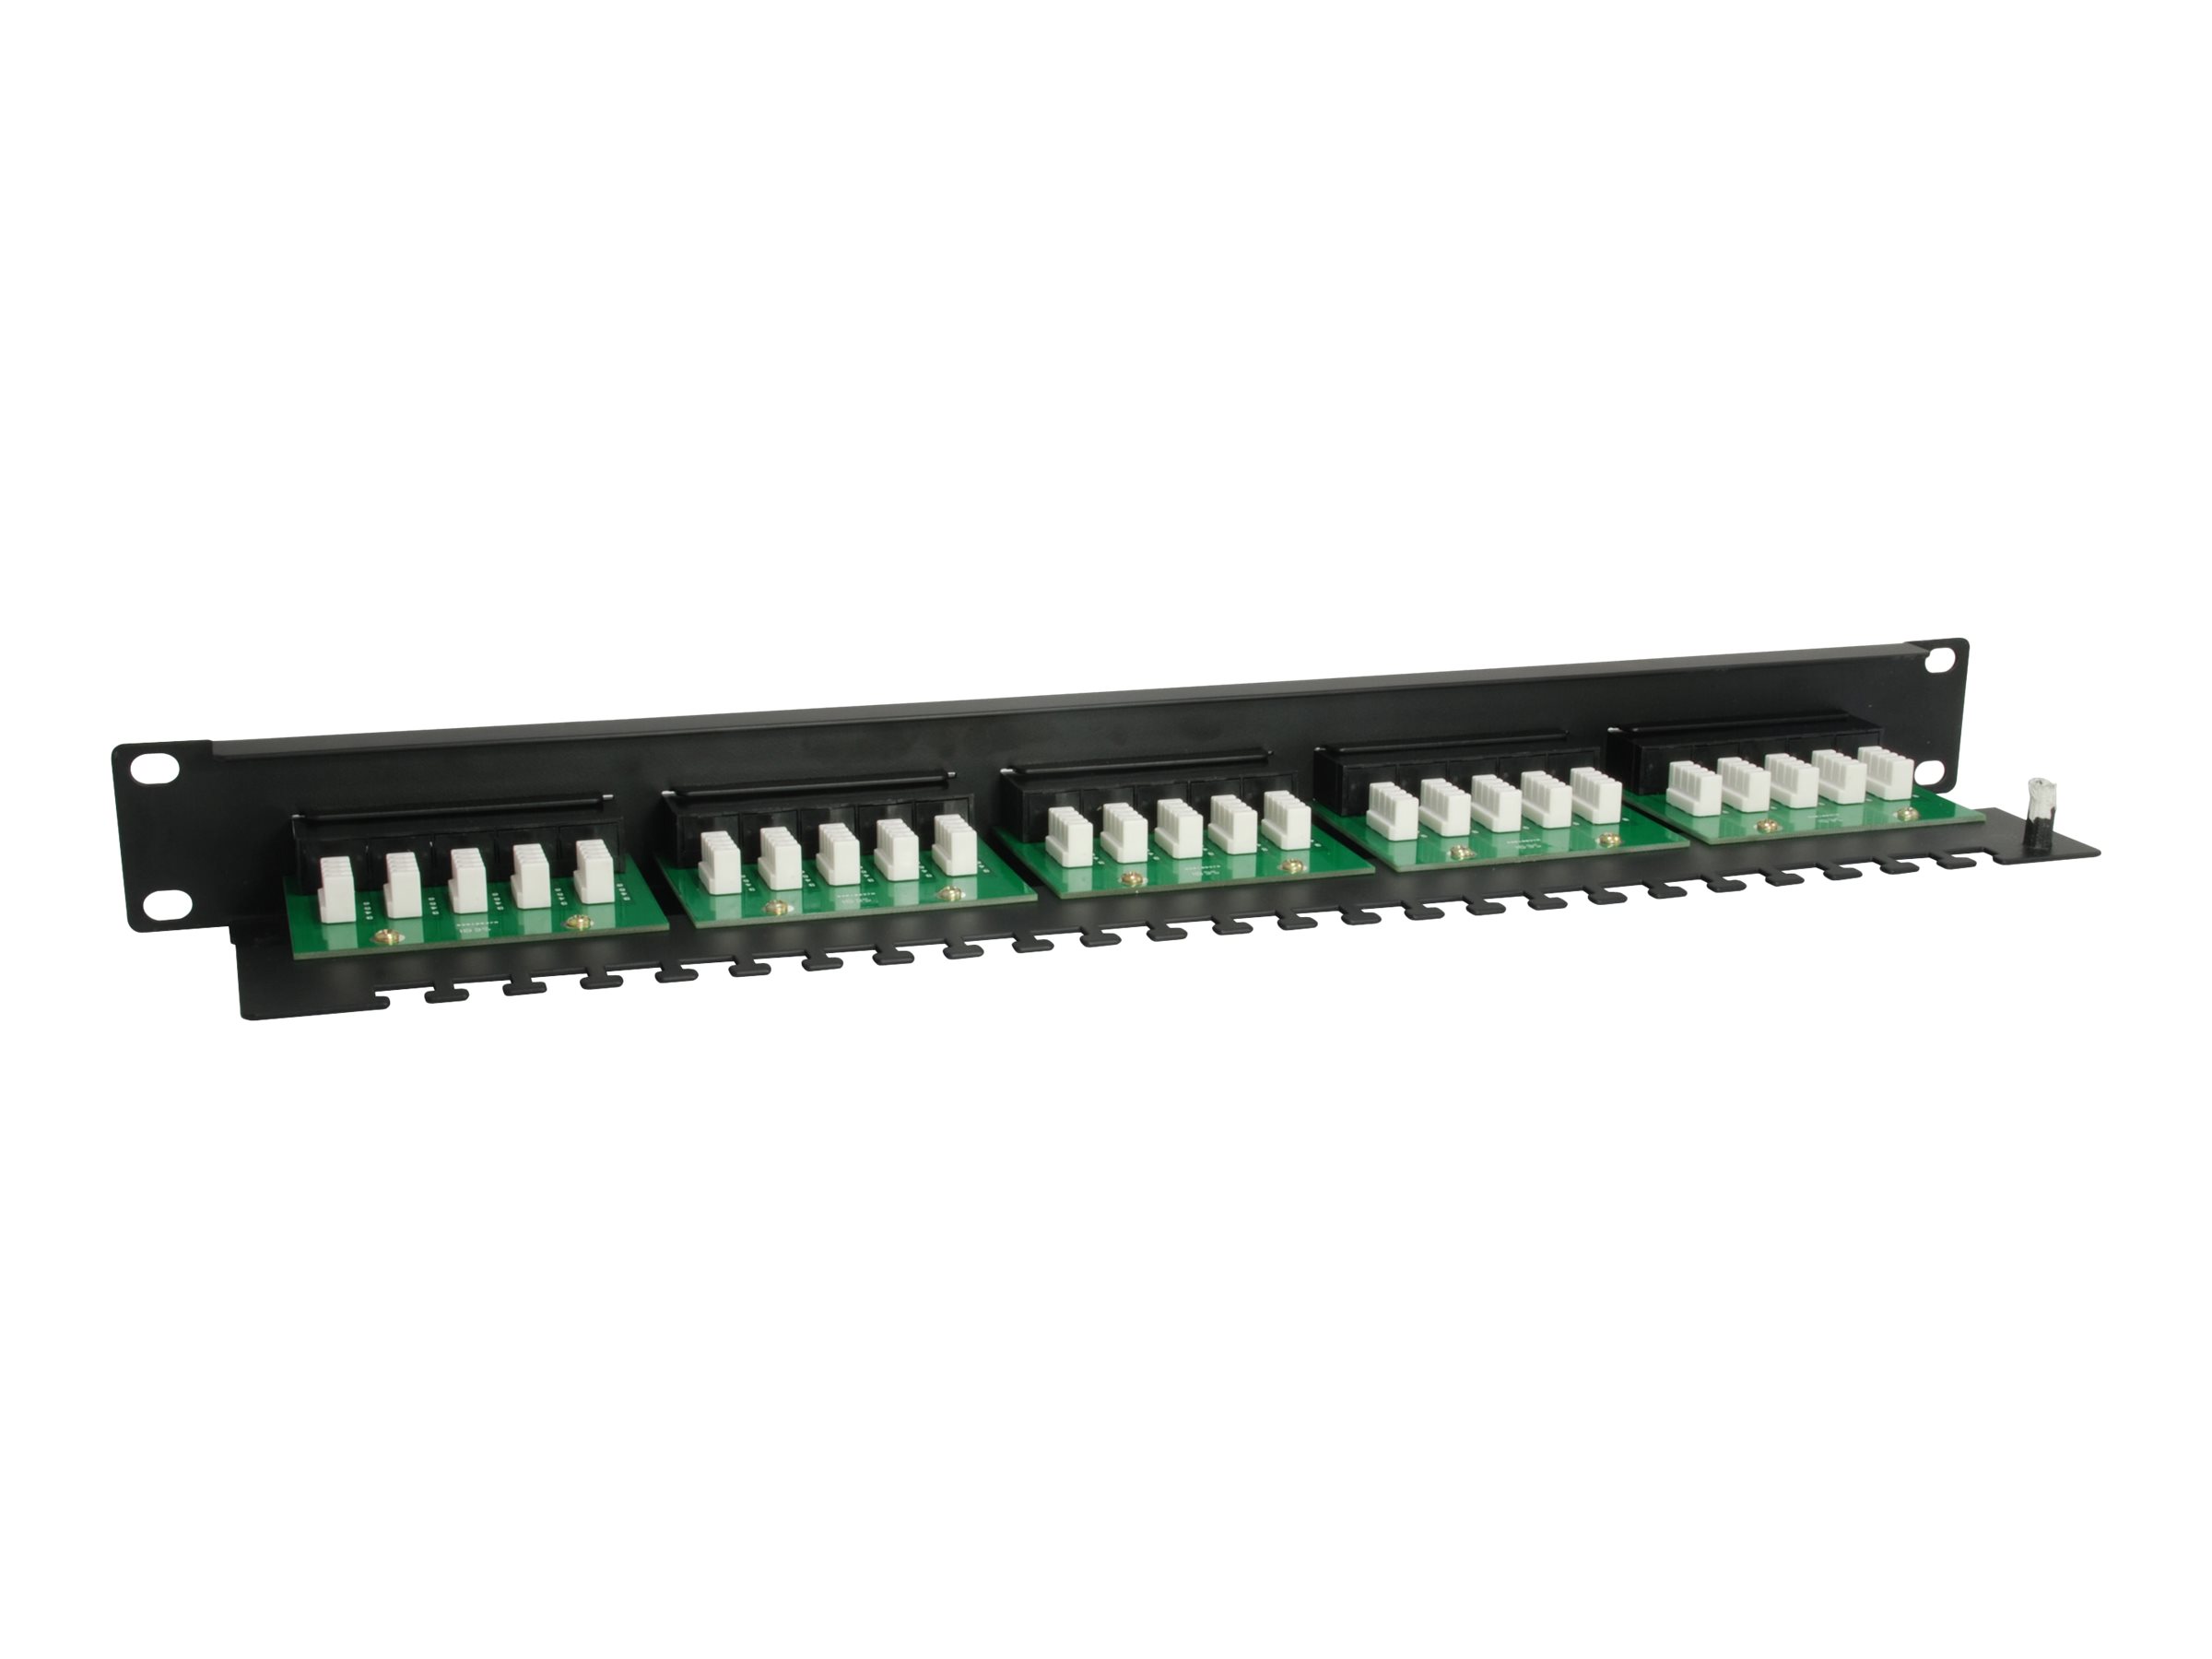 Equip Pro ISDN - Patch Panel - CAT 3 - RJ-45 X 25 - Schwarz - 1U - 48.3 cm (19 in)